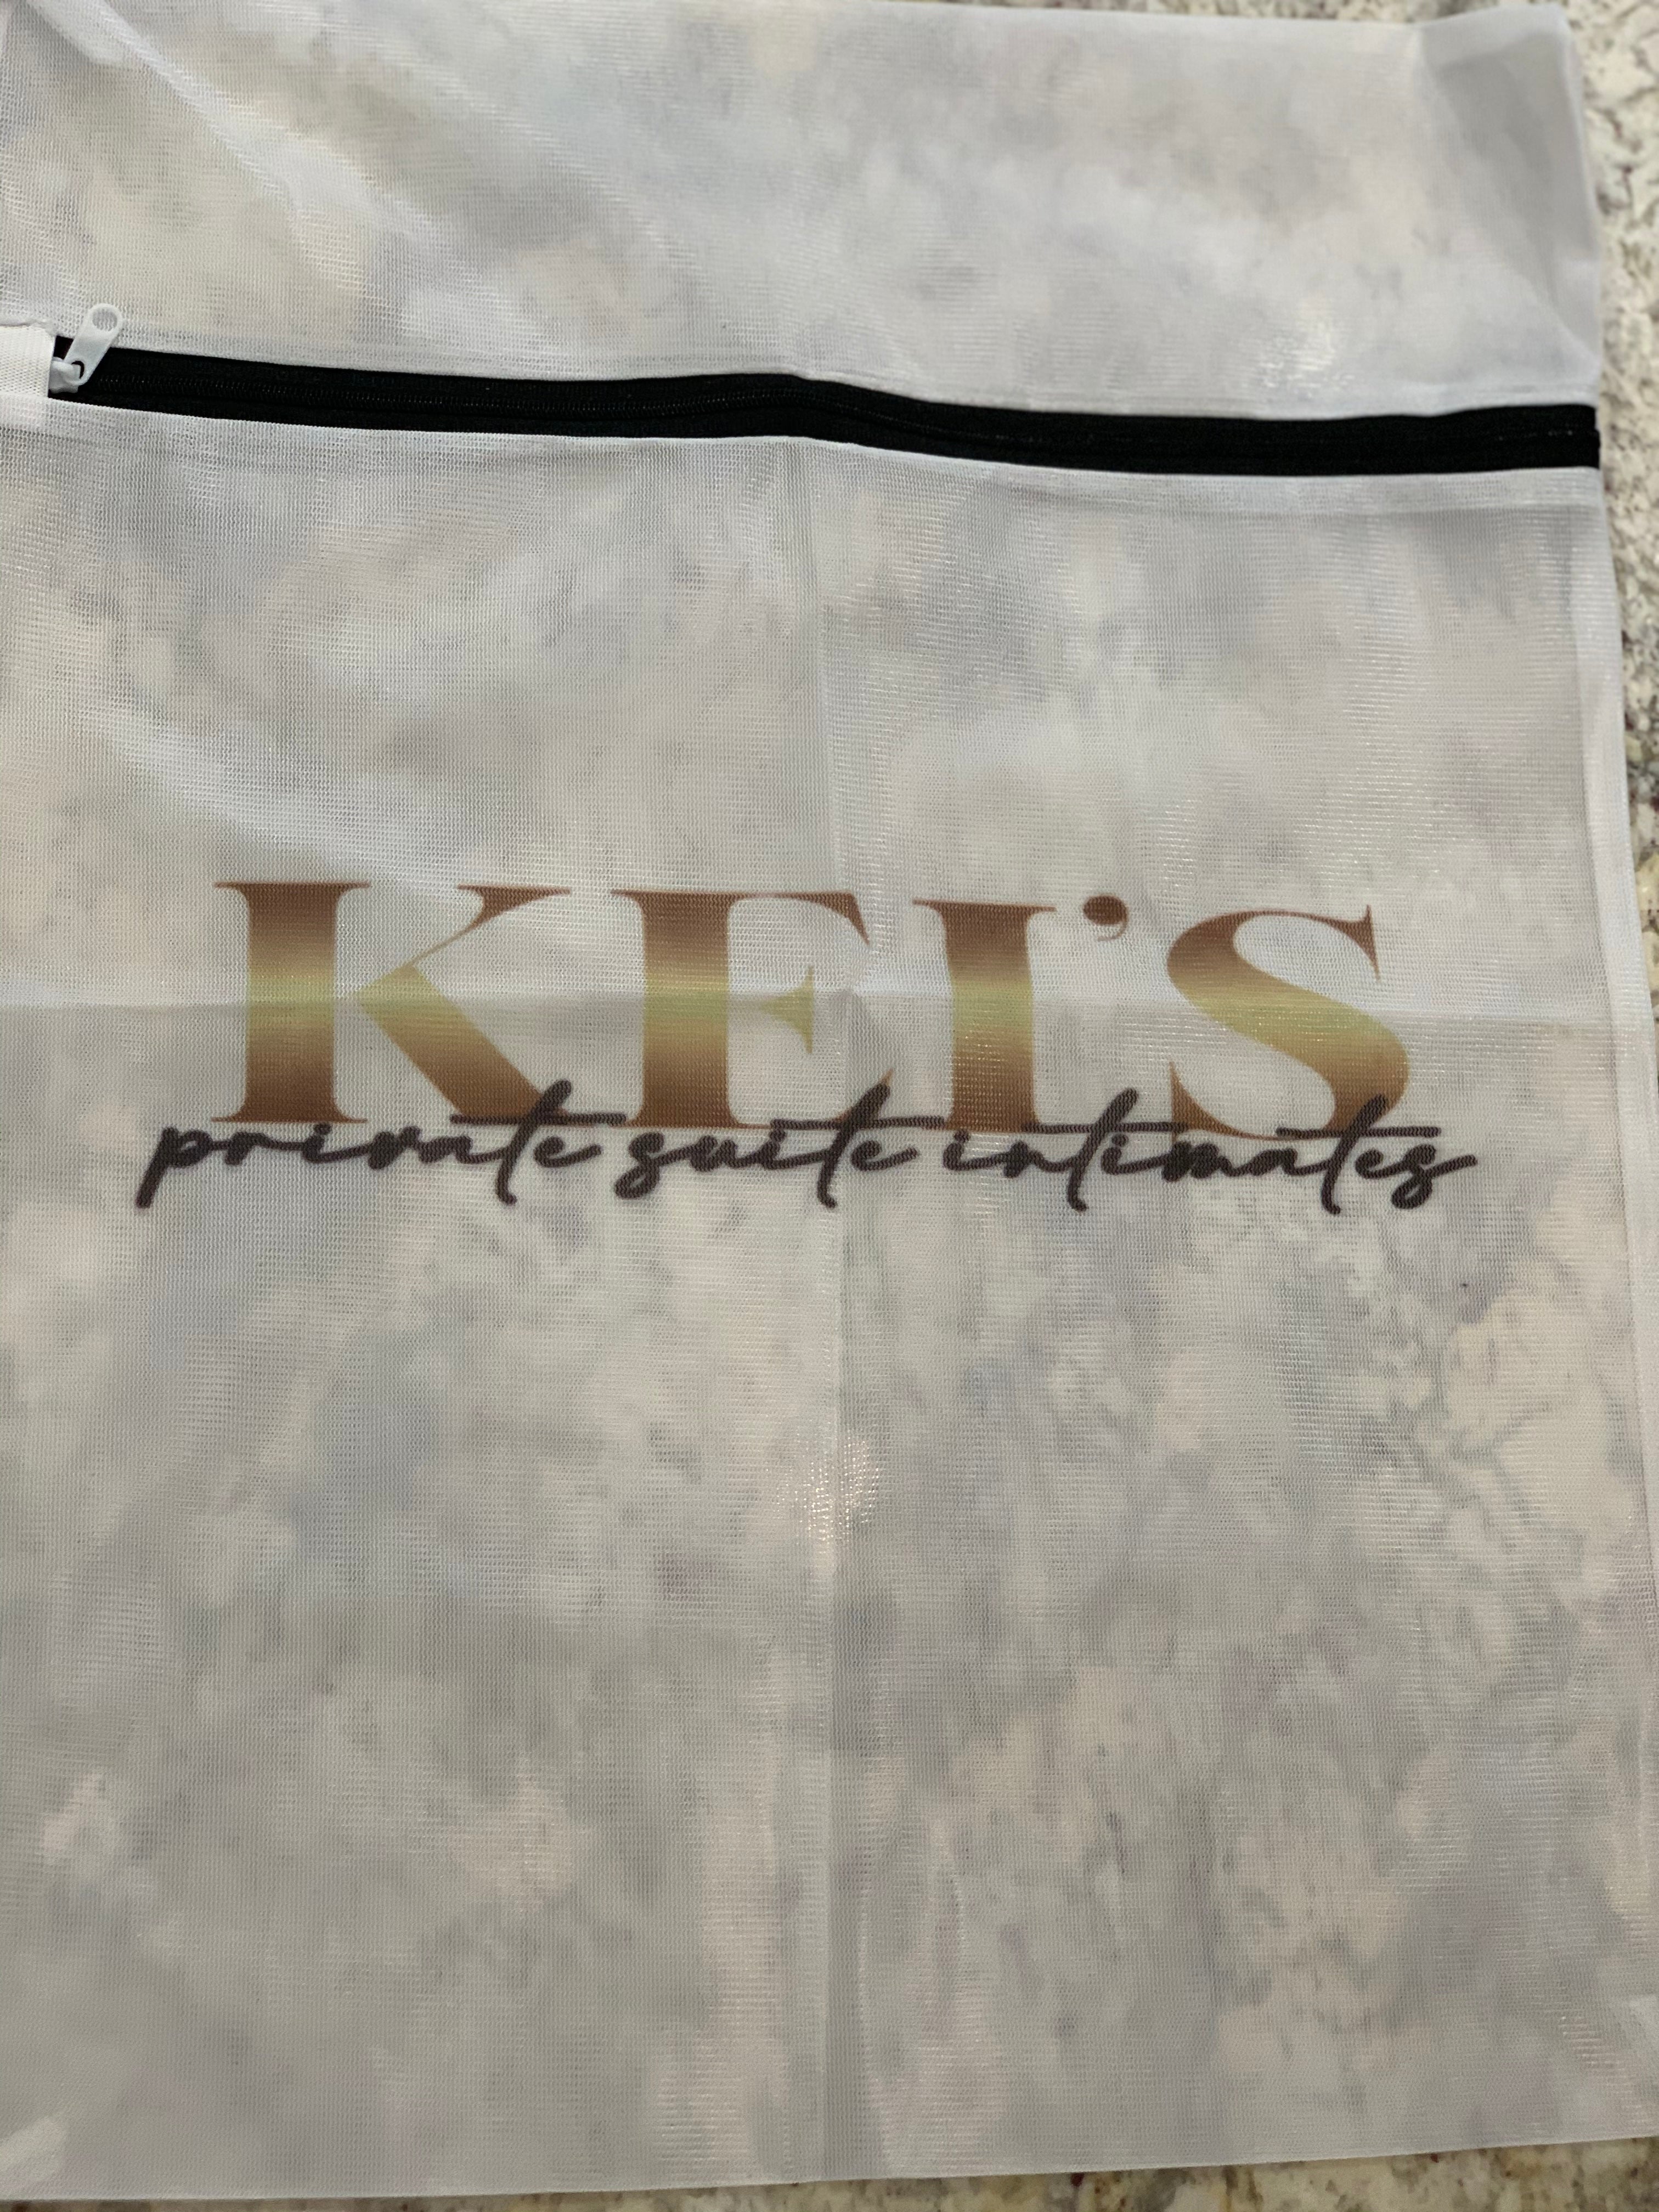 Kei's Private Suite Delicates Laundry Bag